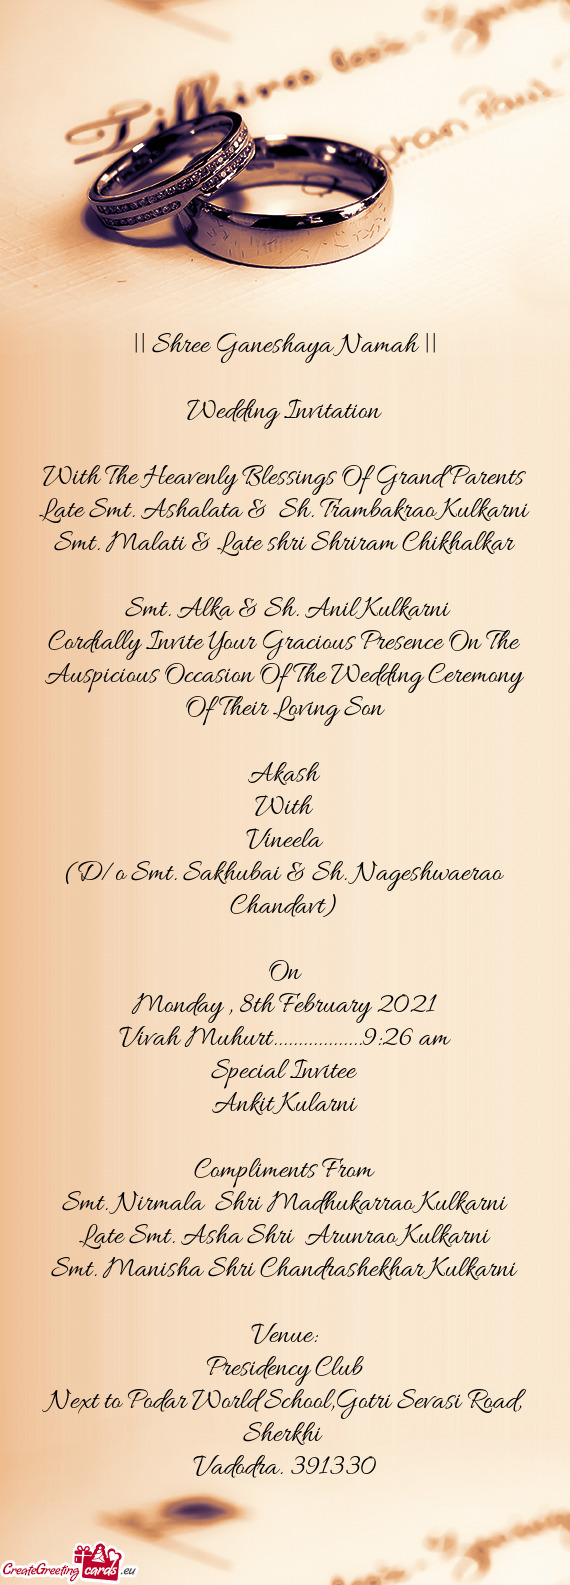 Smt. Malati & Late shri Shriram Chikhalkar